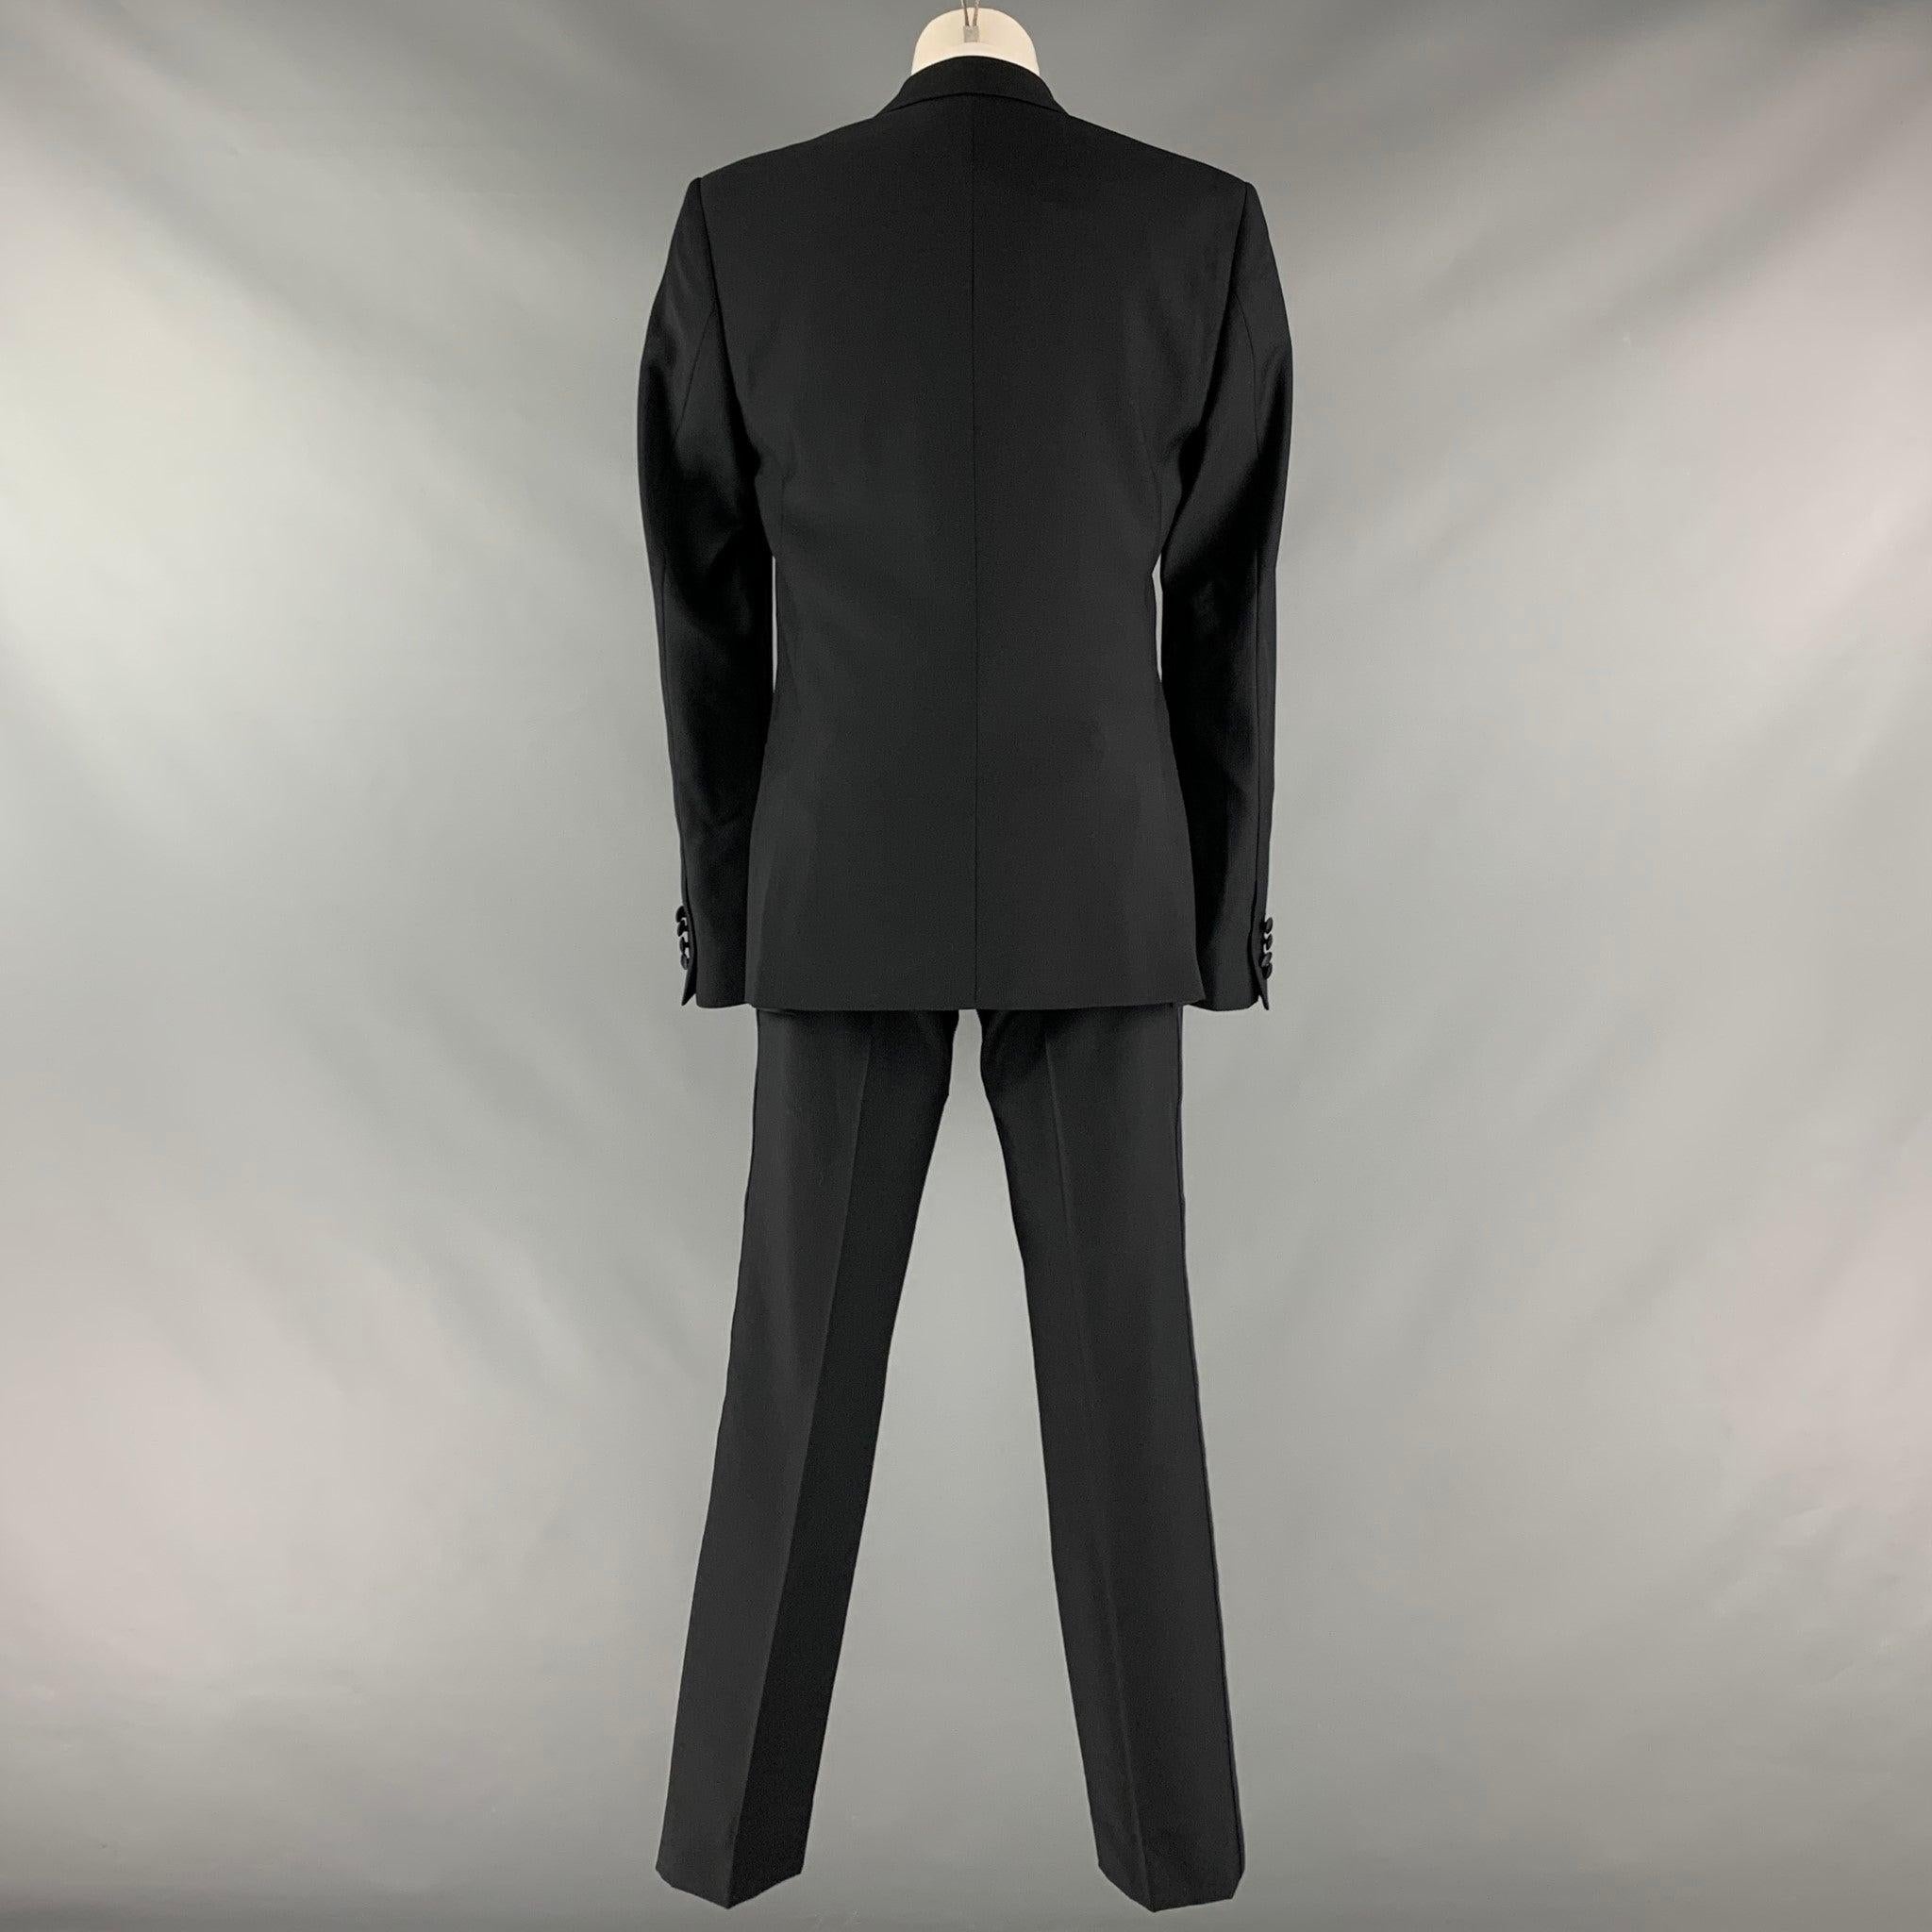 CALVIN KLEIN COLLECTION Size 34 Black Solid Wool Peak Lapel Tuxedo For Sale 1